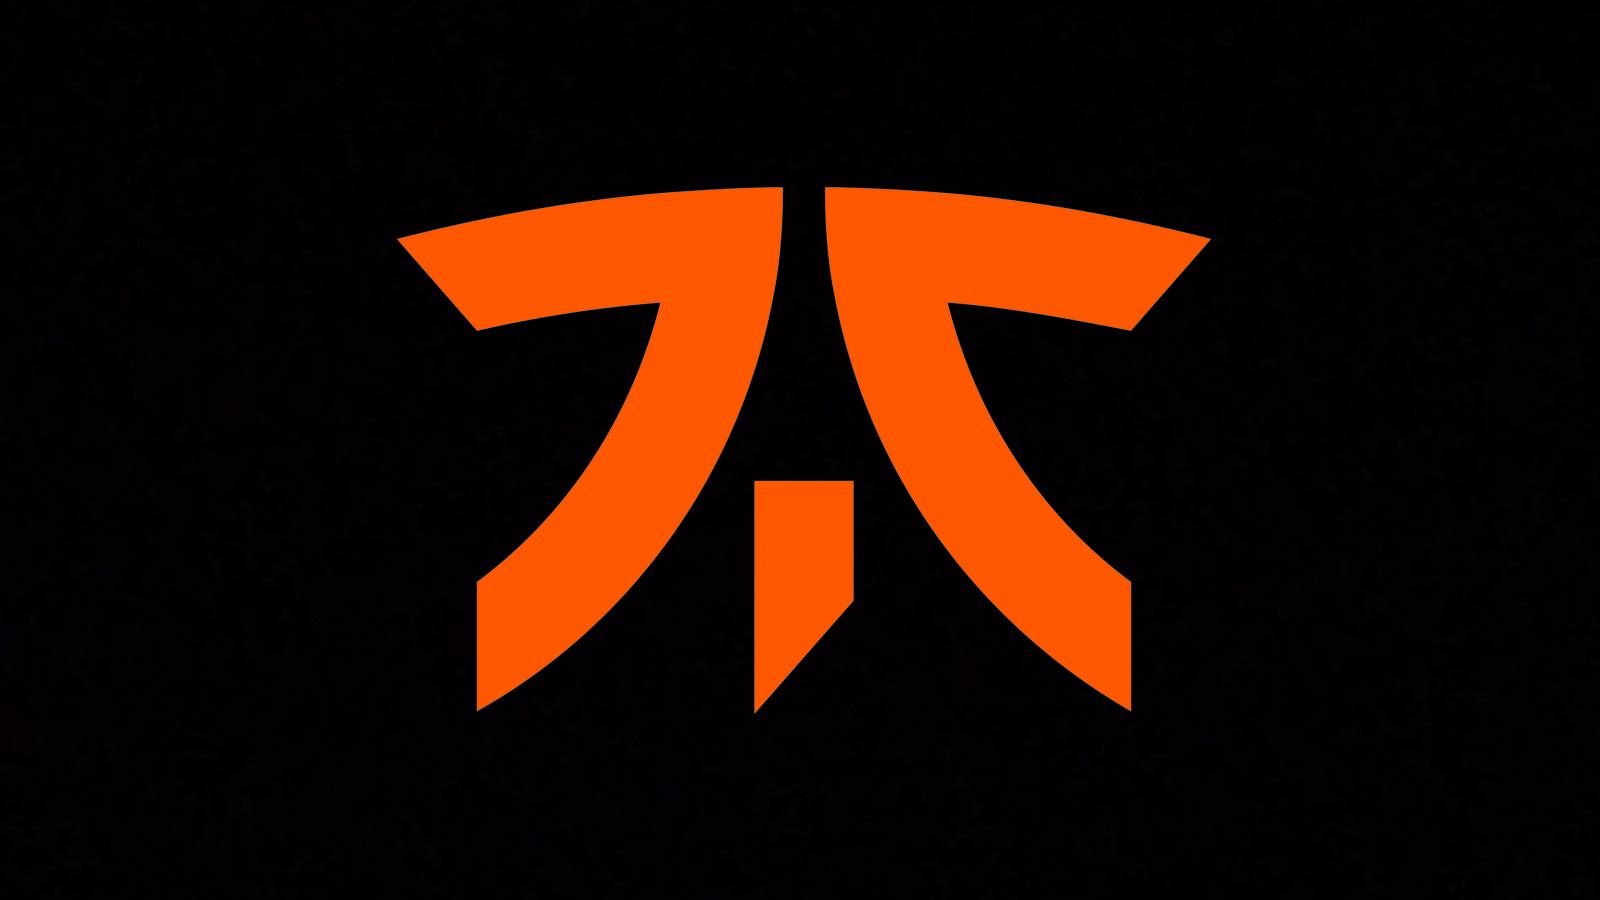 New Fnatic logo leaked ahead of rebrand